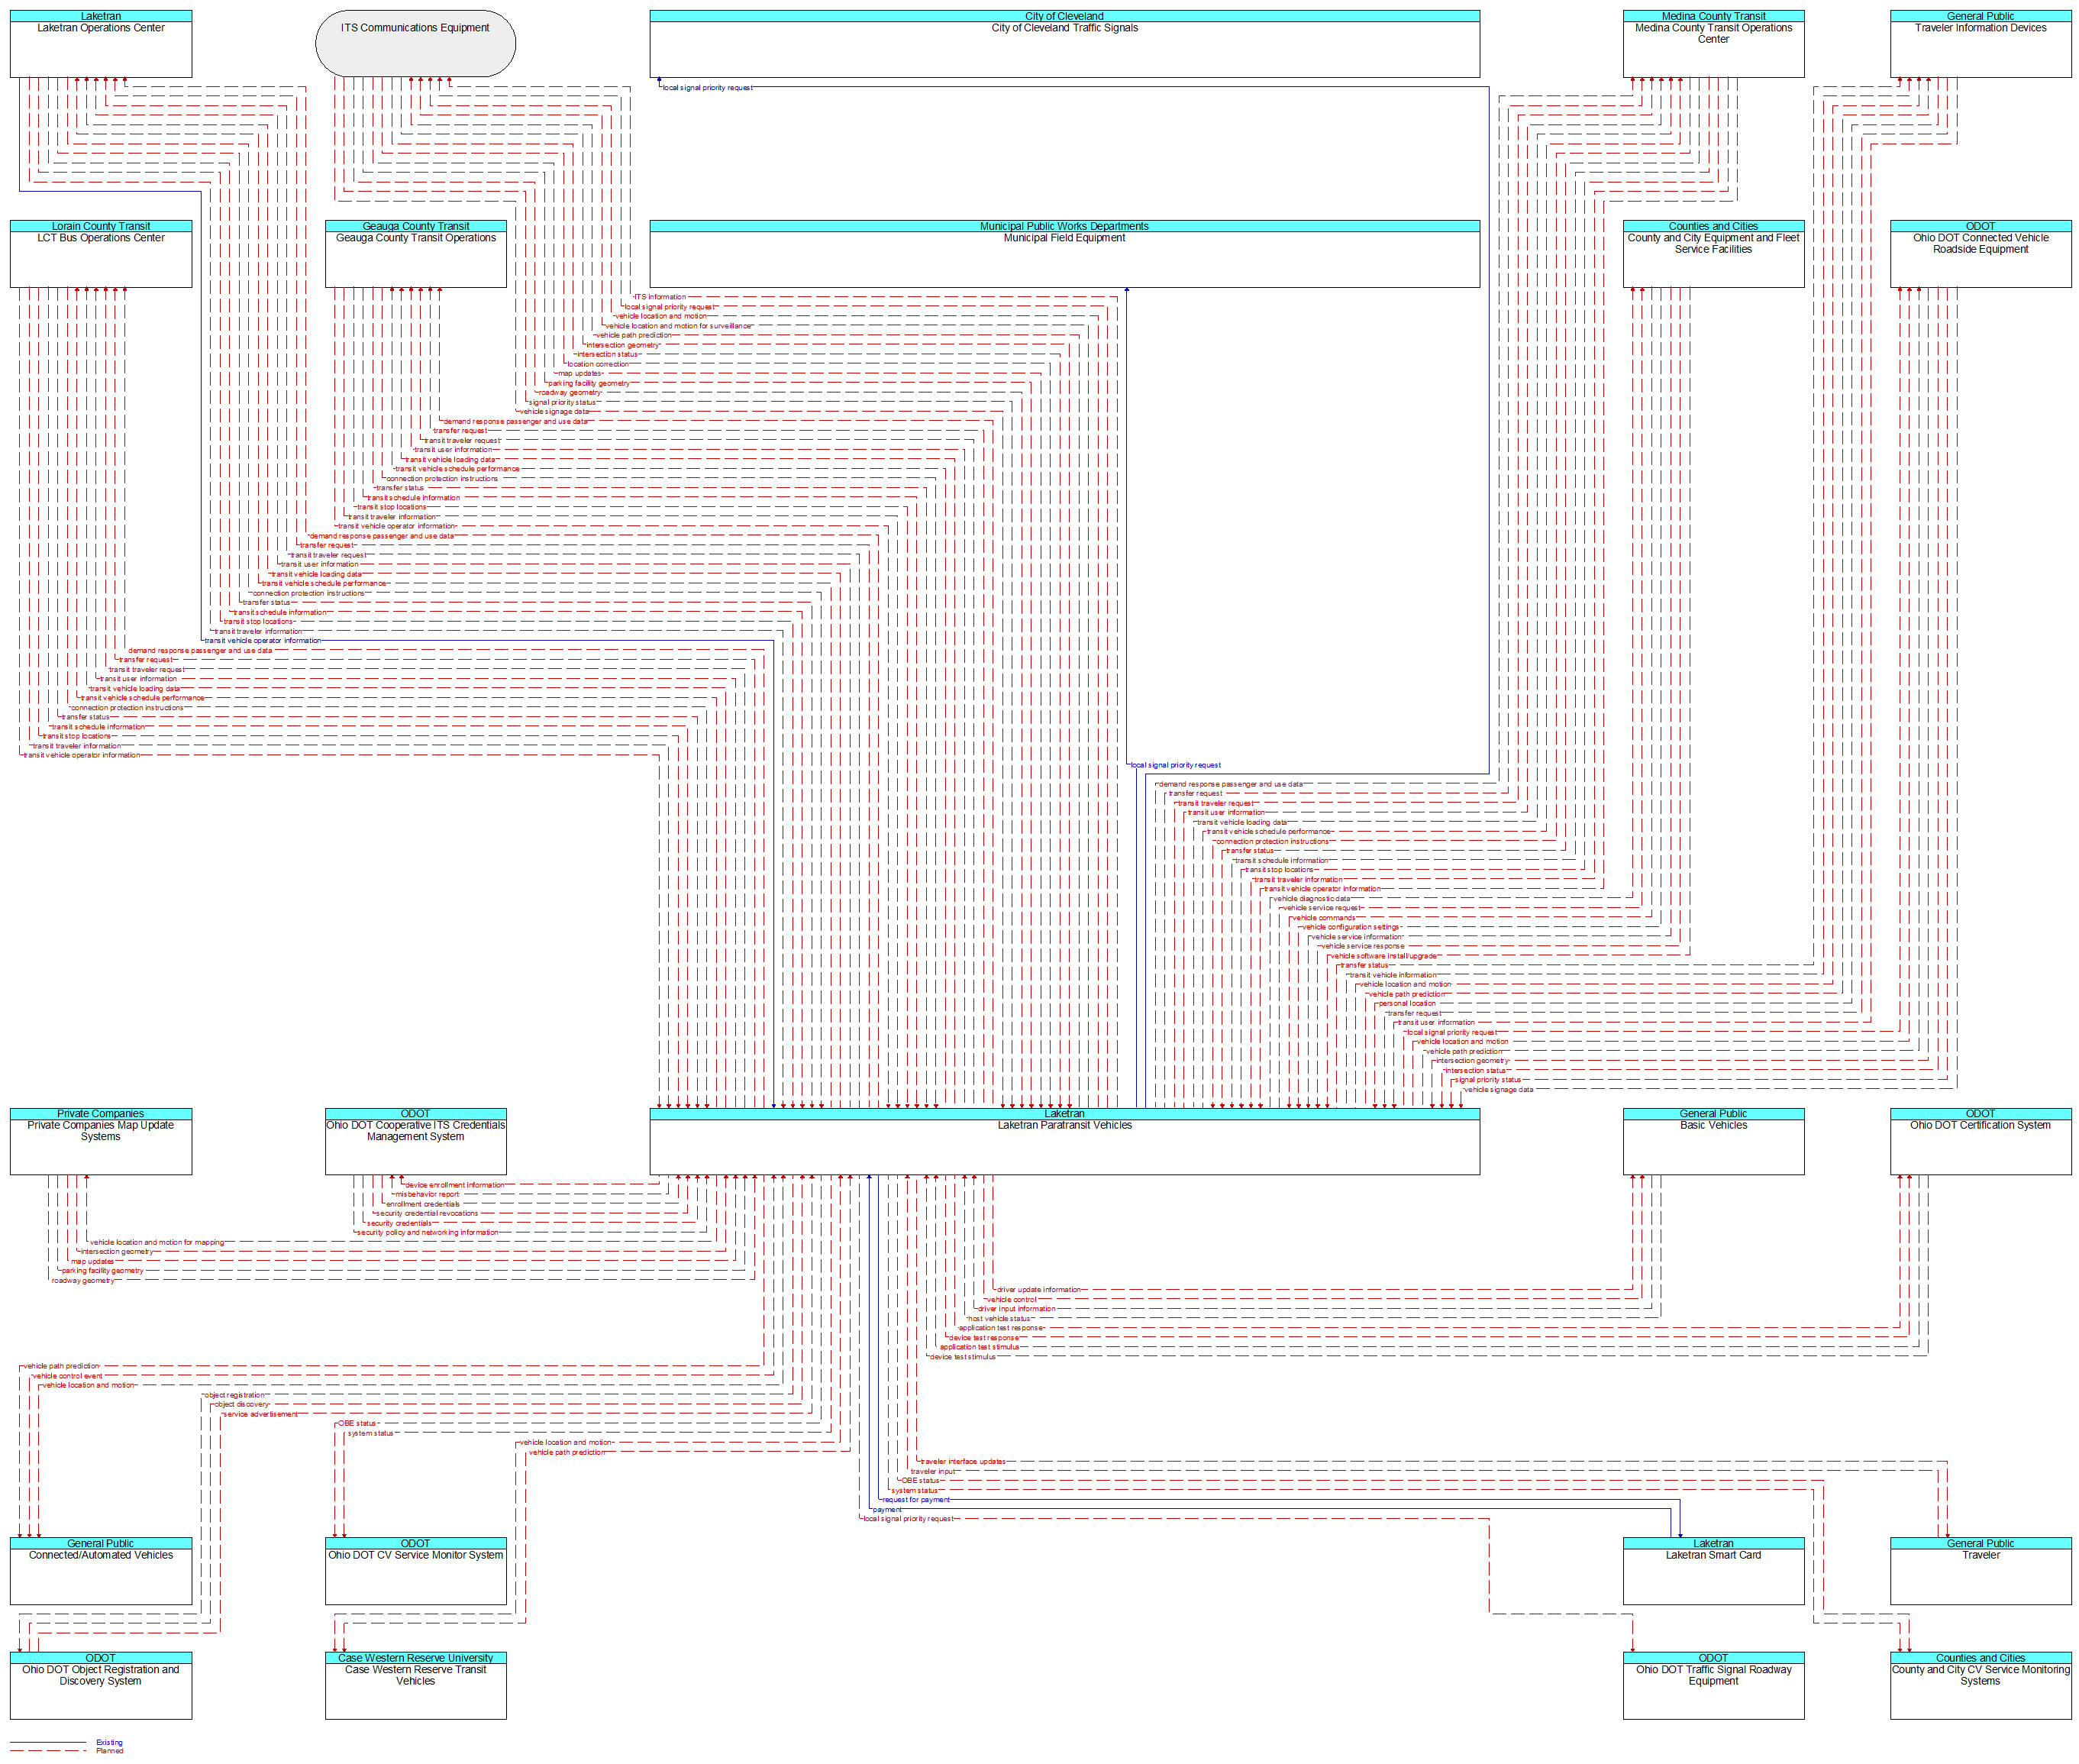 Context Diagram - Laketran Paratransit Vehicles